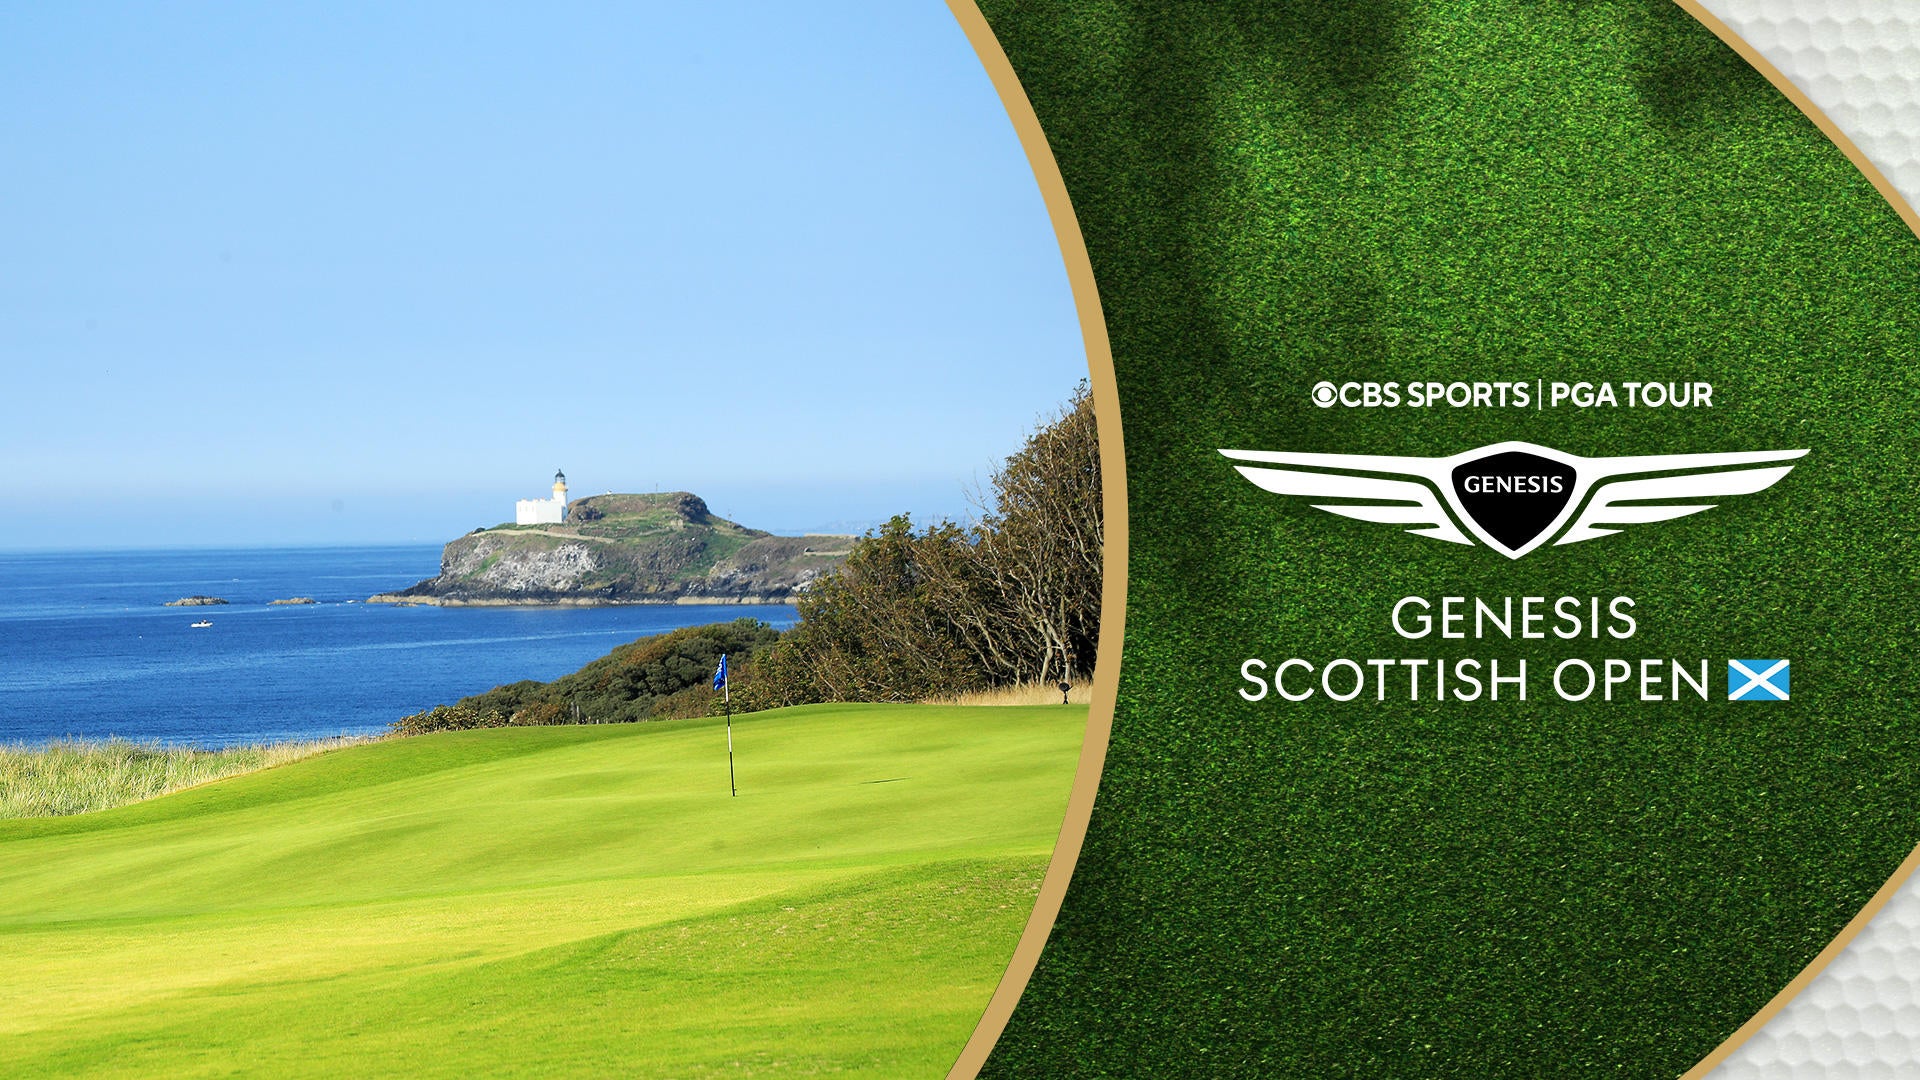 Genesis Scottish Open Live Stream of PGA TOUR